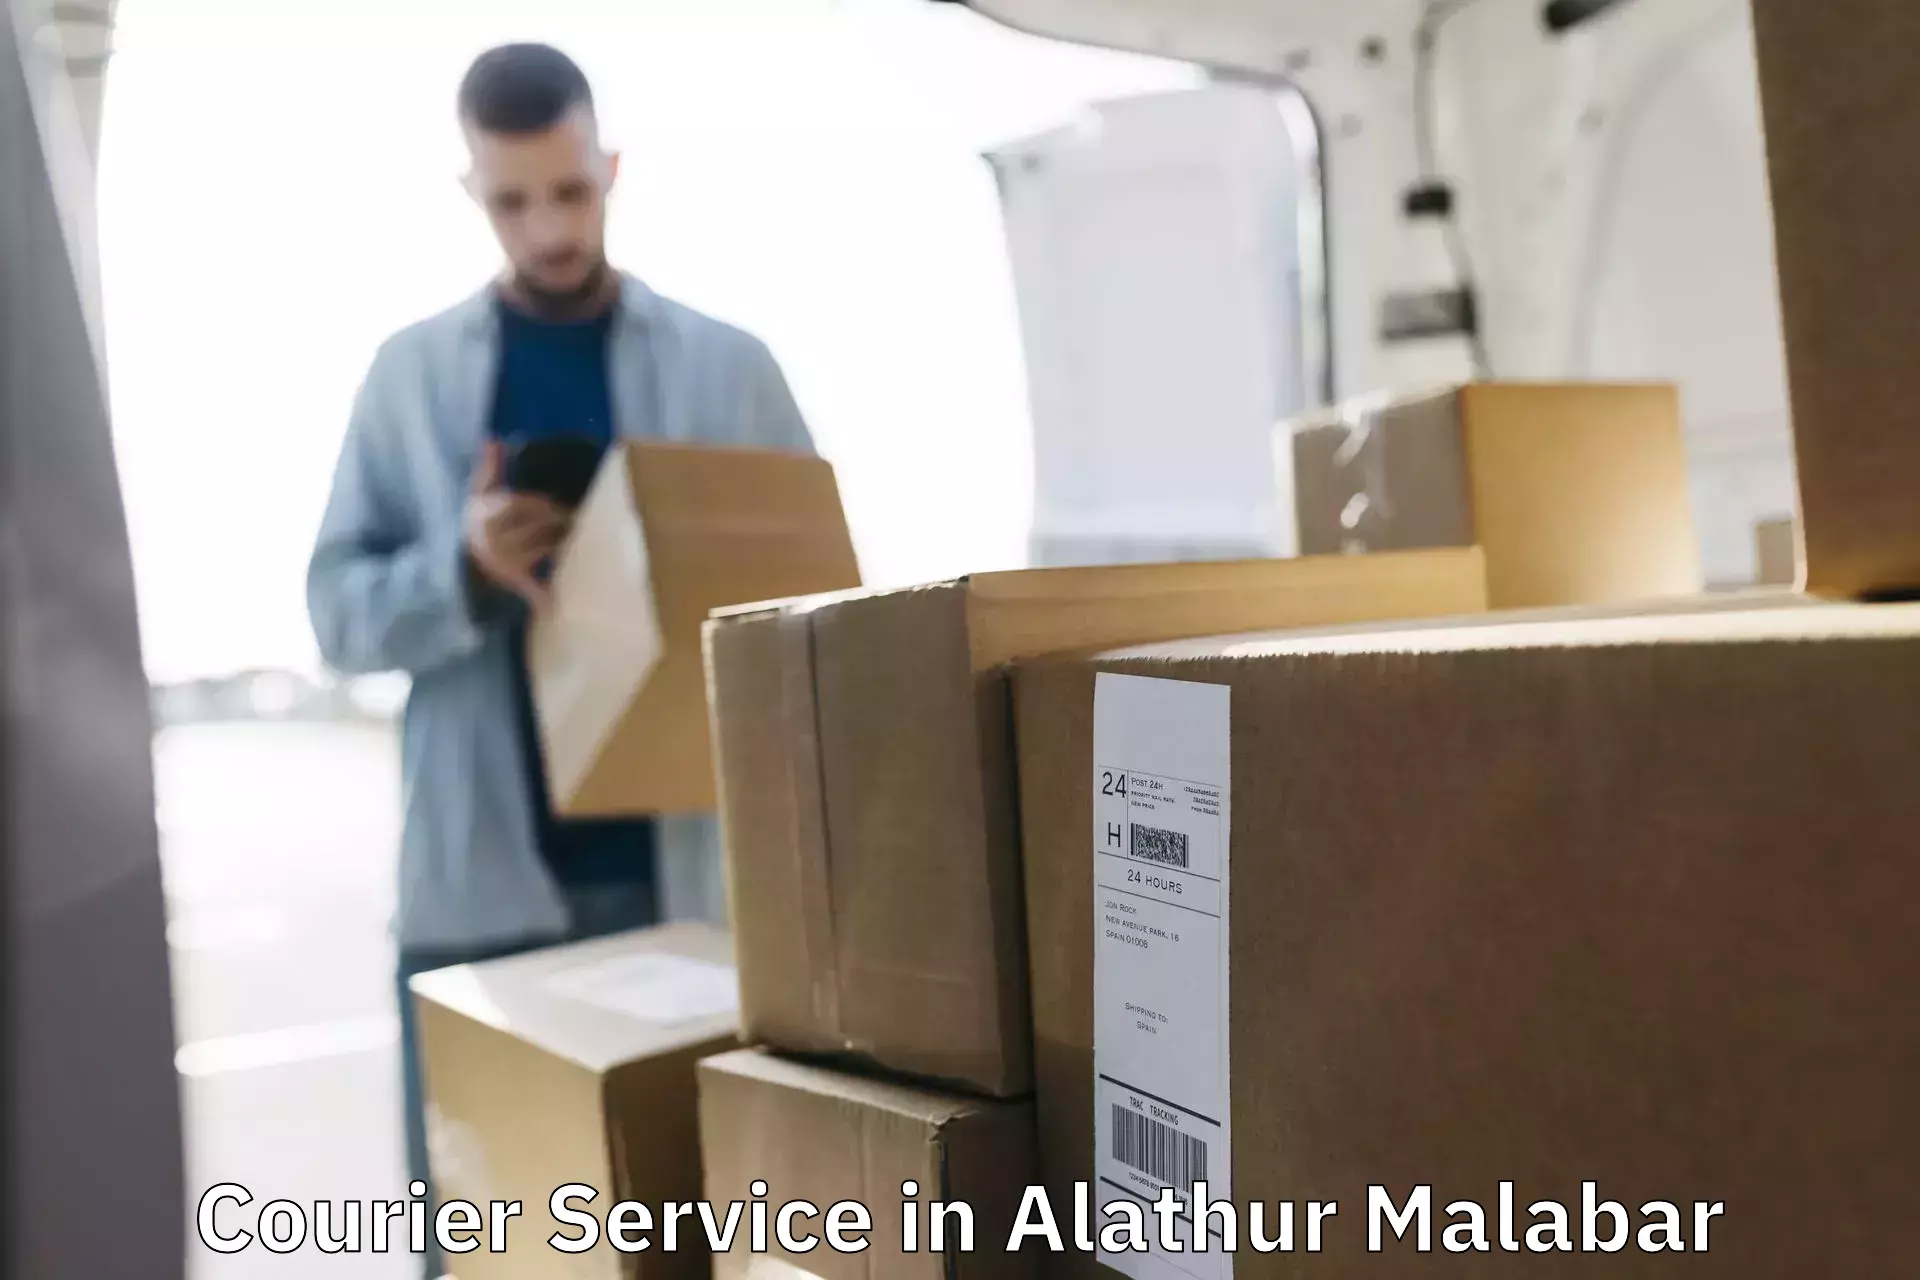 Punctual parcel services in Alathur Malabar